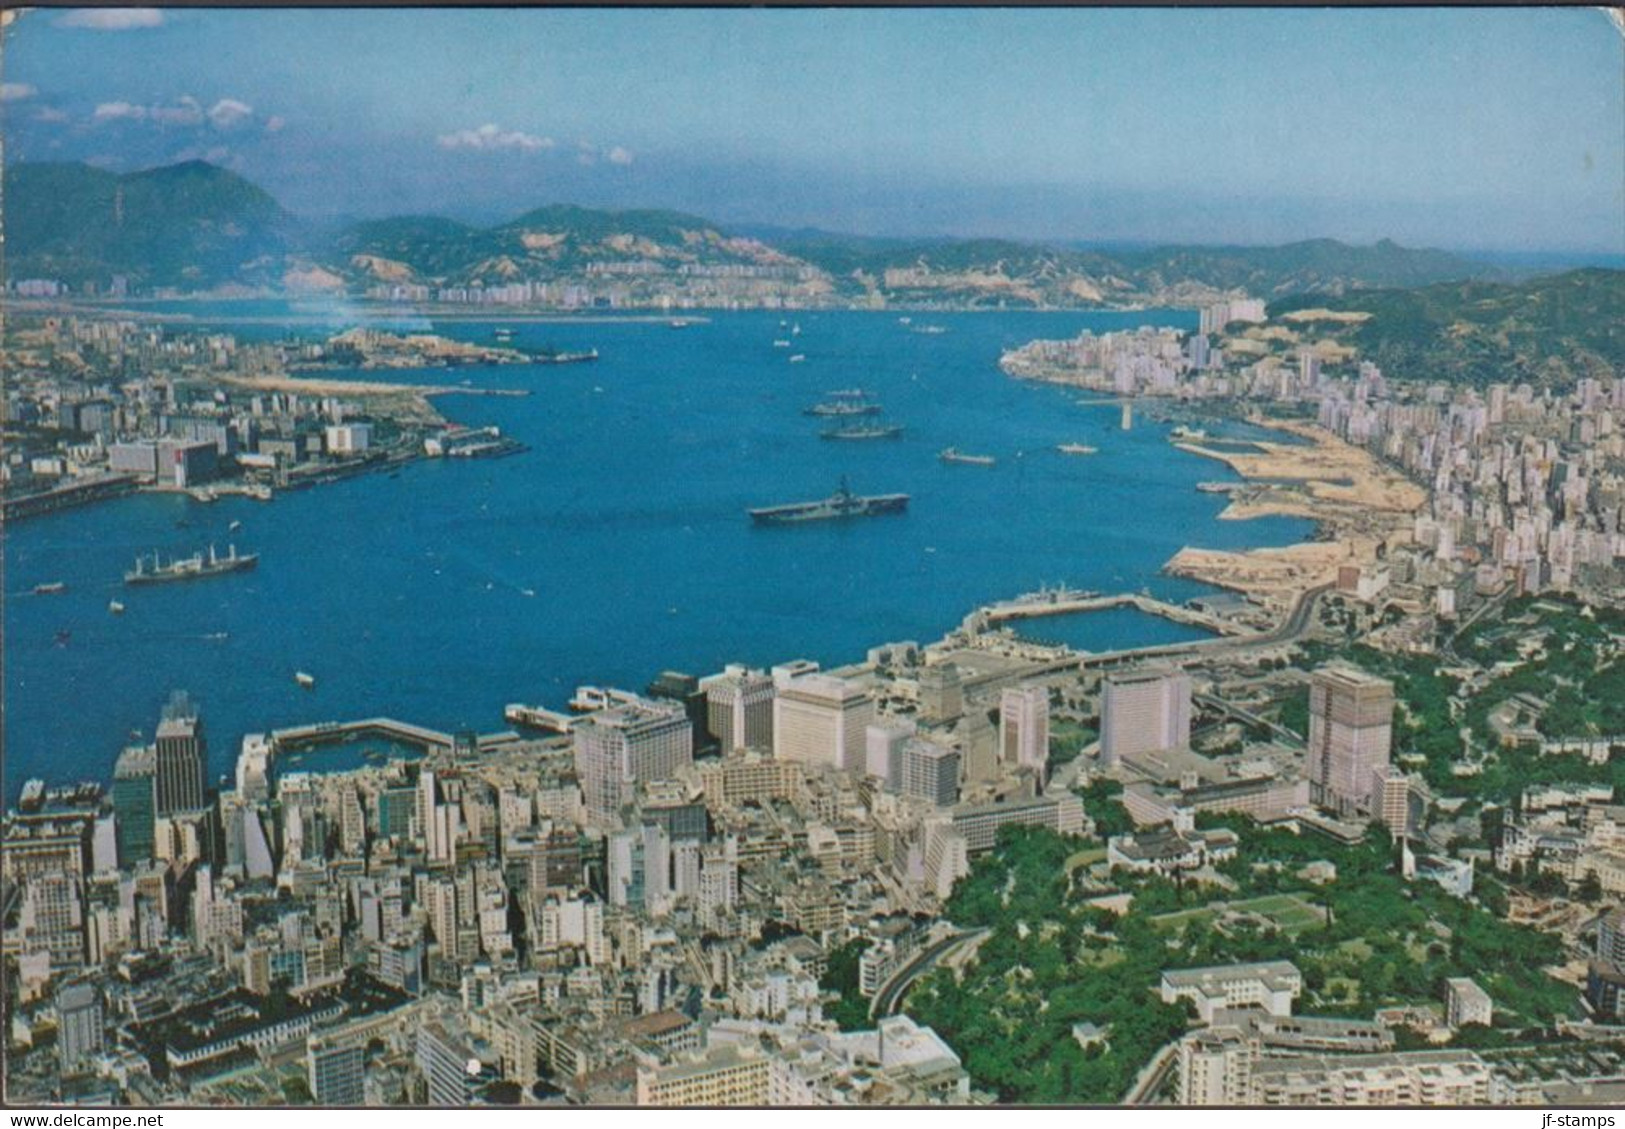 1970. HONG KONG COAT OF ARMS $ 1. On Post Card (Hong Kong & Kowloon From The Peak) To USA Fro... (Michel 239) - JF427096 - Briefe U. Dokumente